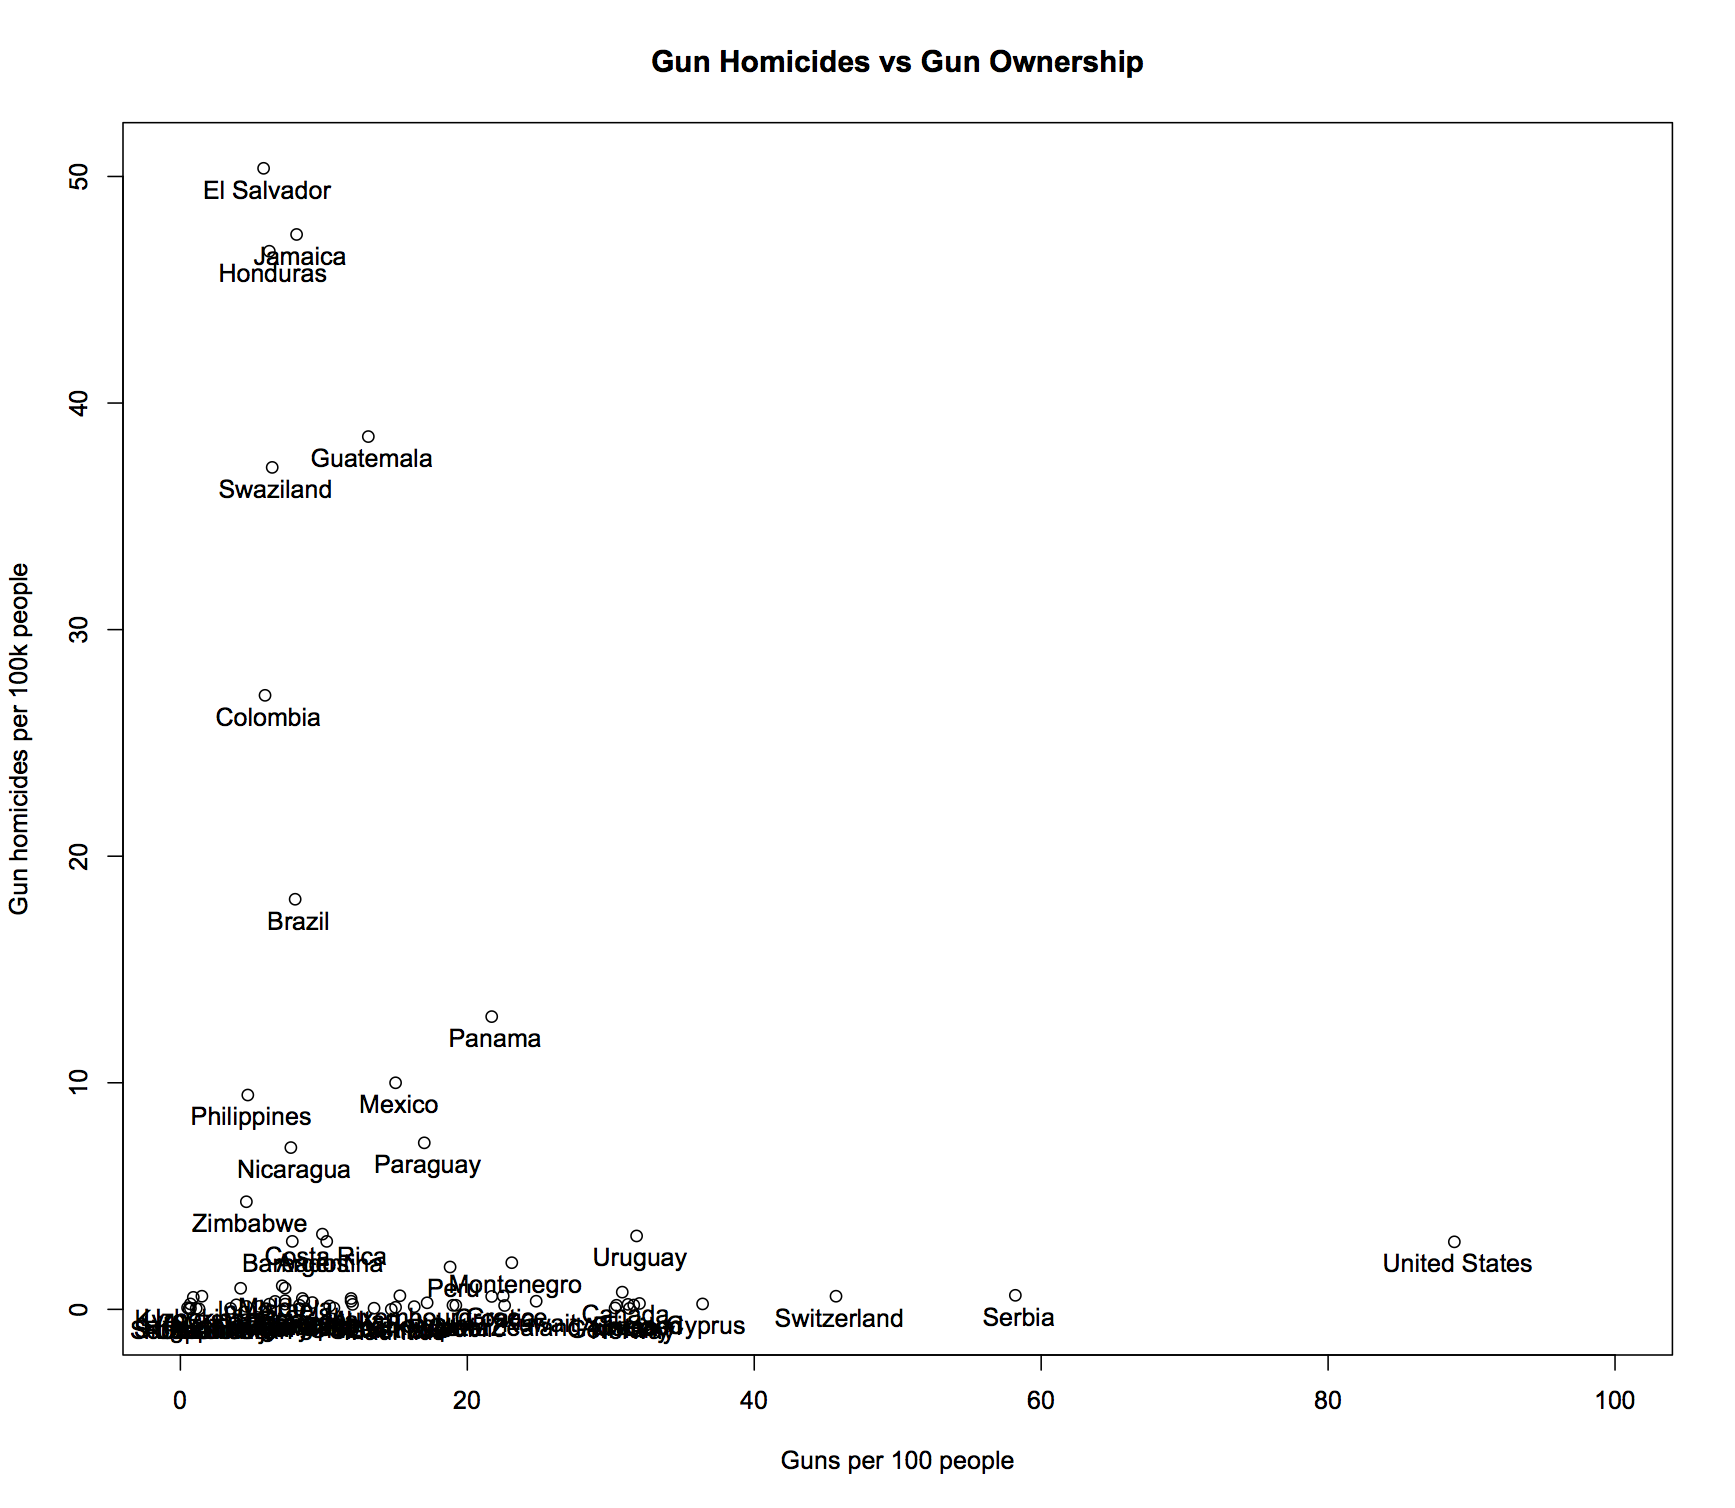 Gun homicides vs. Gun Ownership for all countries